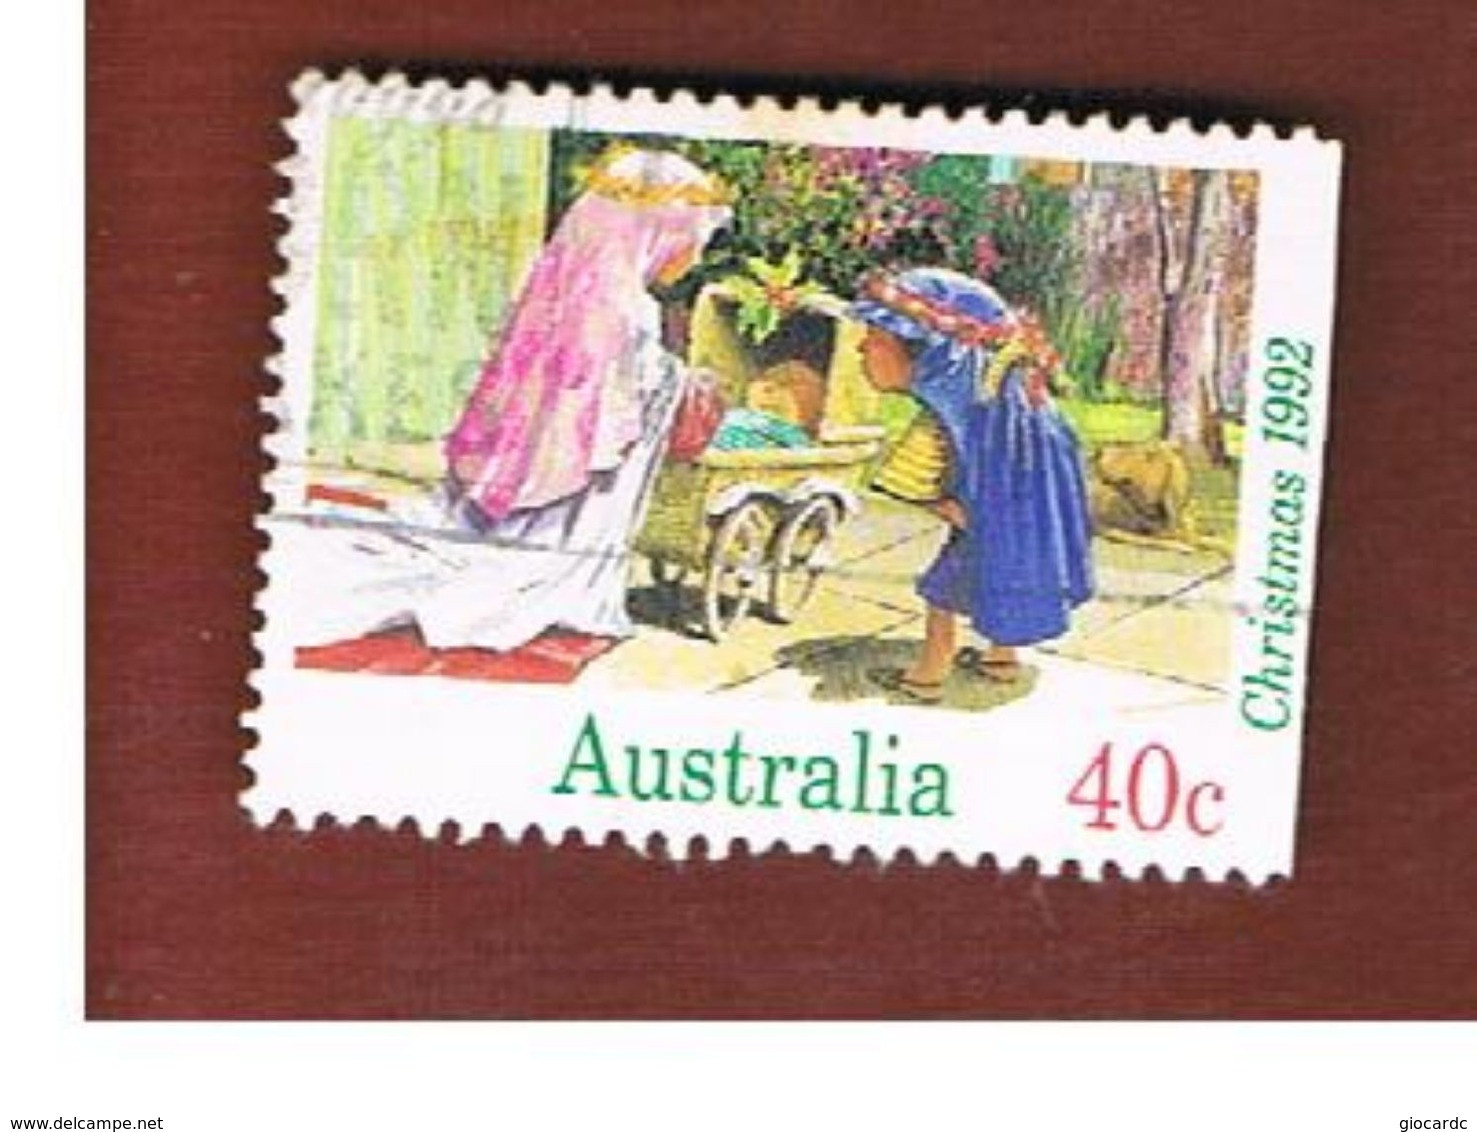 AUSTRALIA  -  SG 1383  -      1992  CHRISTMAS      -       USED - Used Stamps